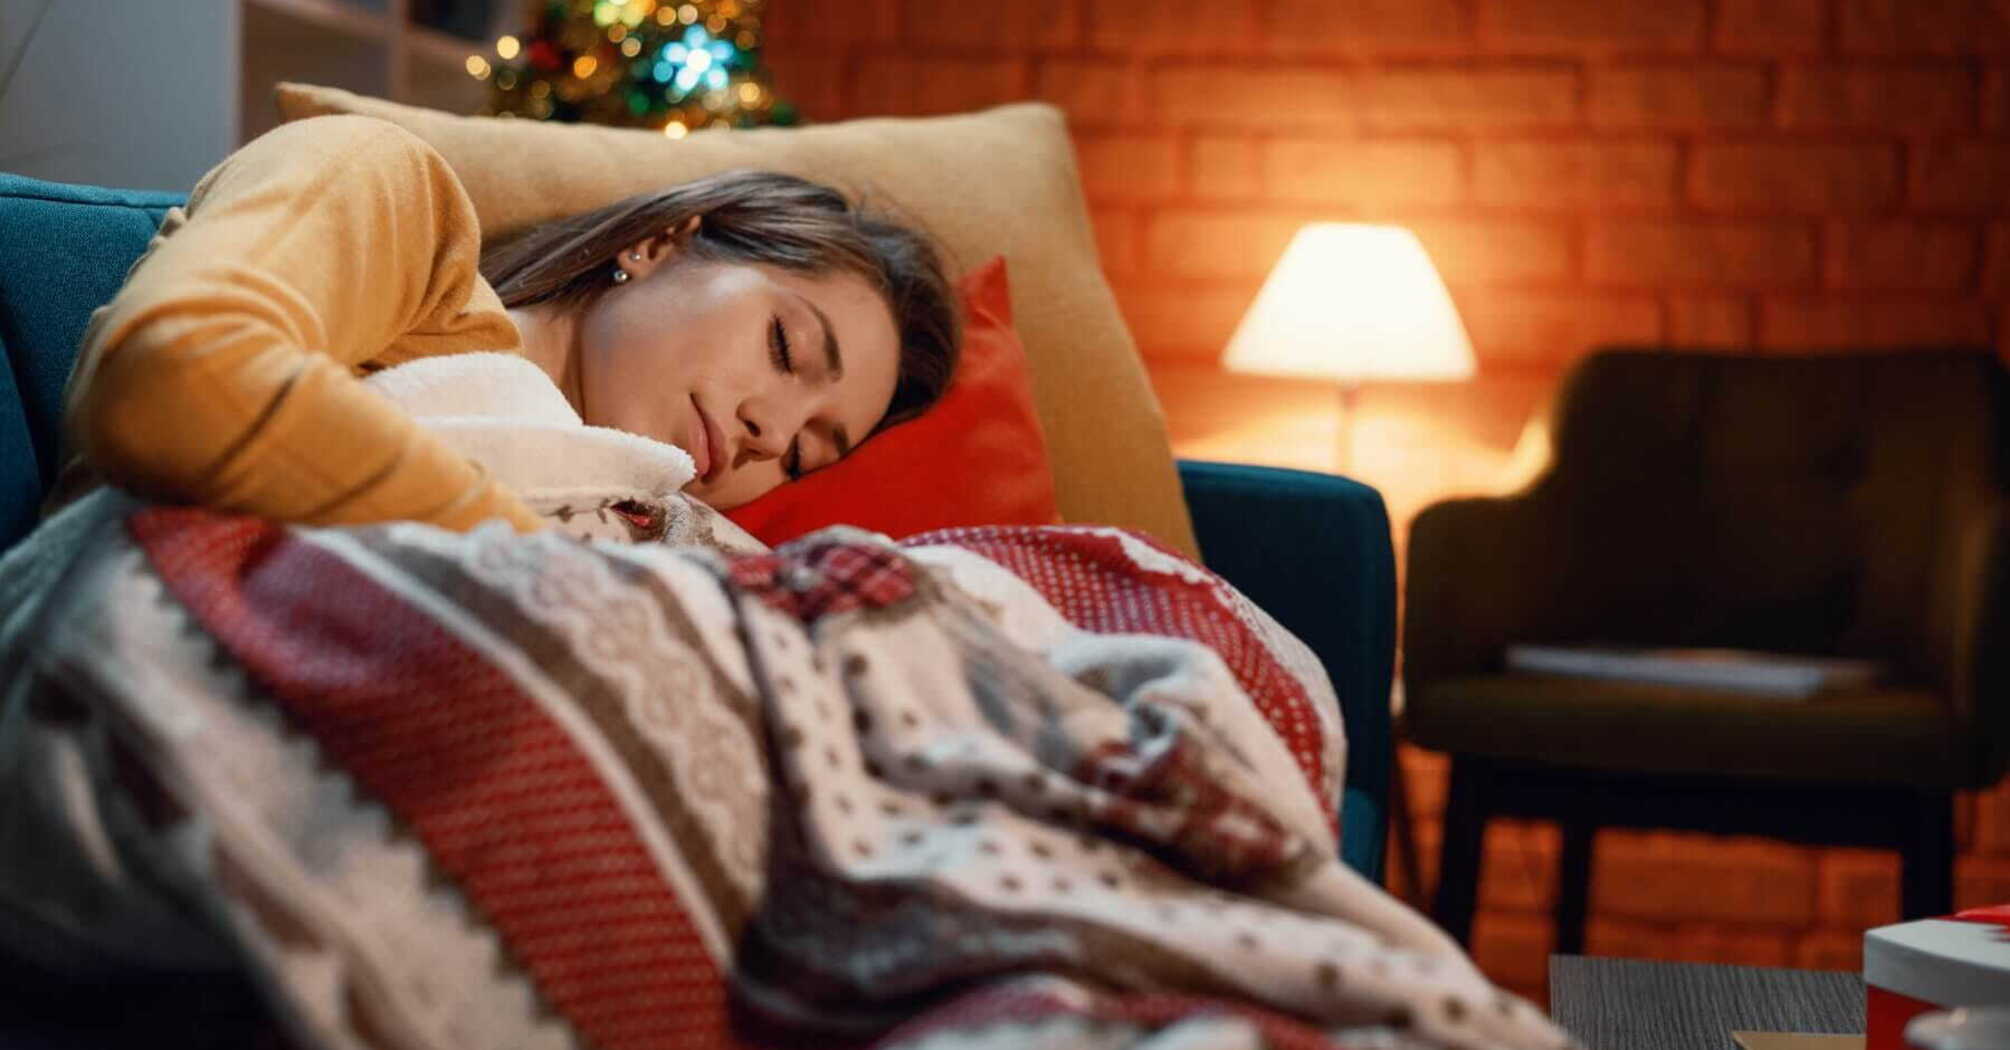 The holiday season and vacations improve sleep